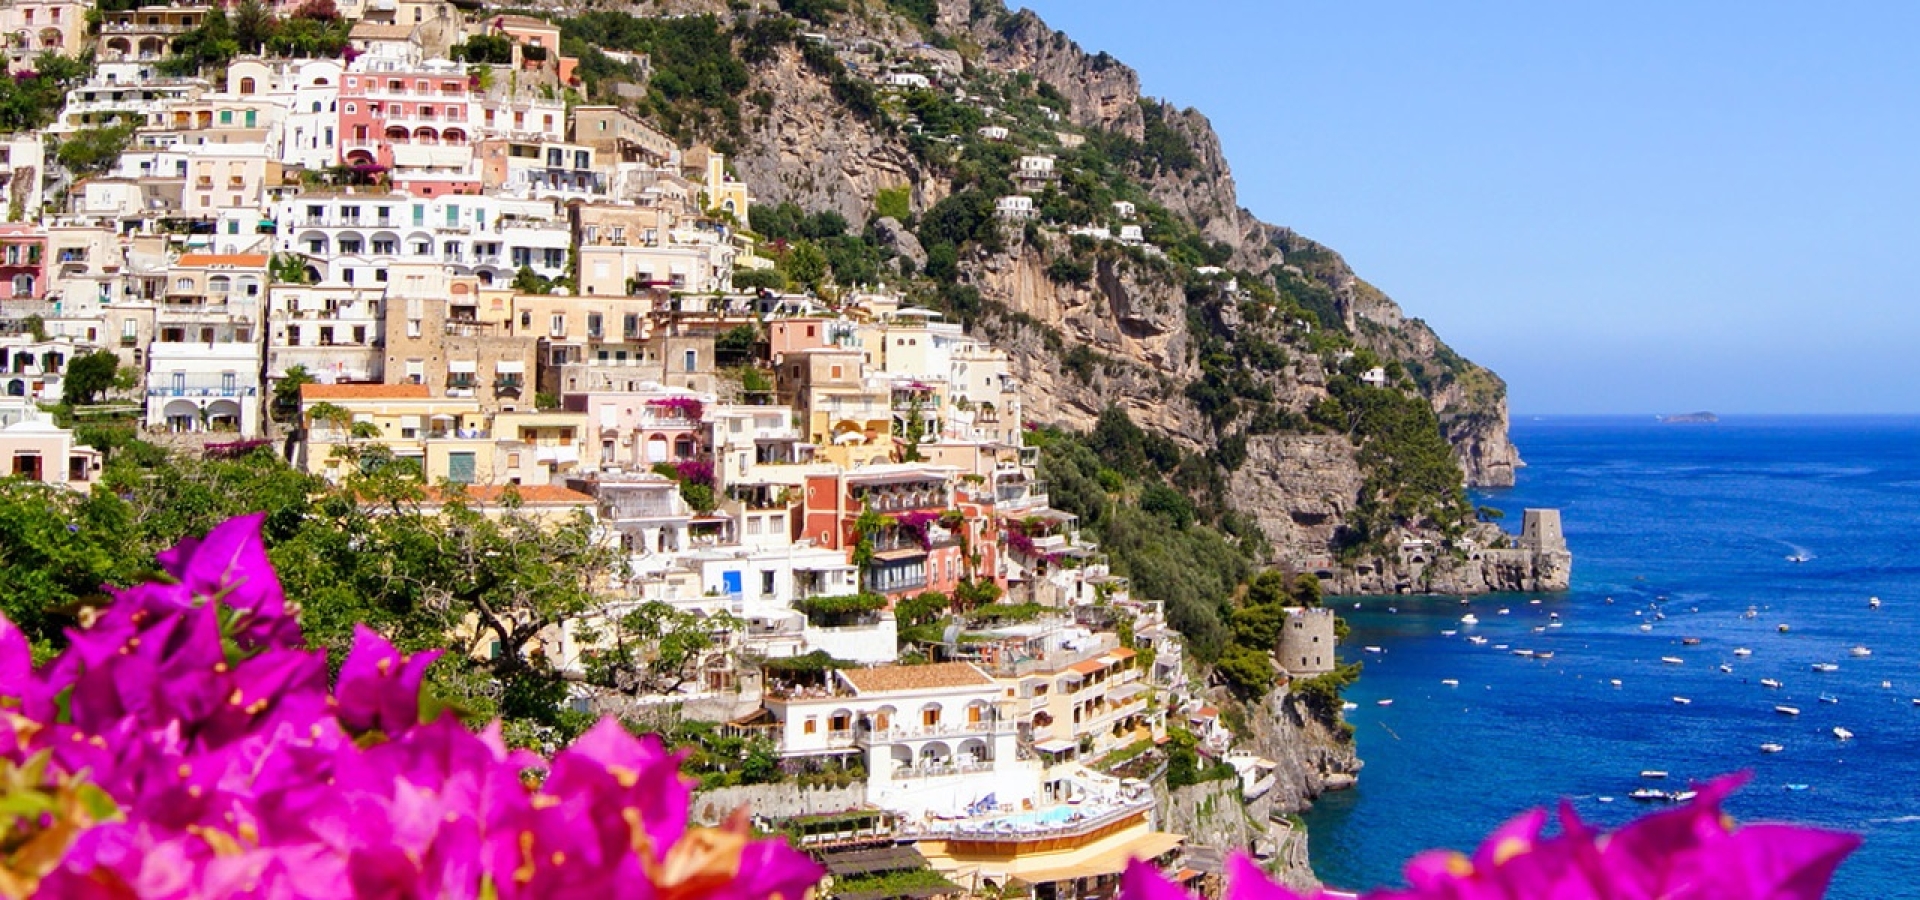 Amalfi Coast in Italy daytime view